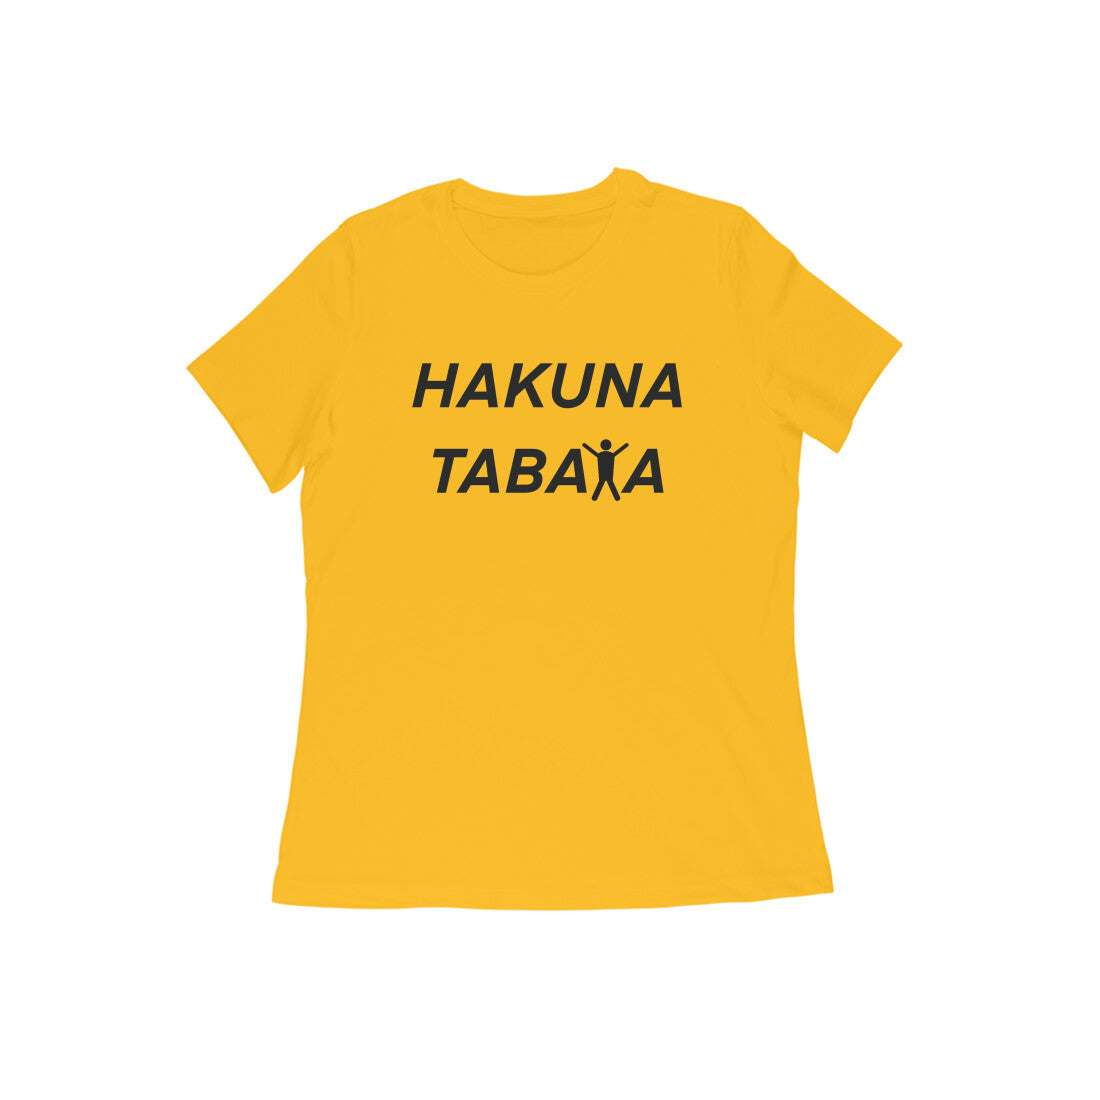 Hakuna tabata CrossFit T-shirt